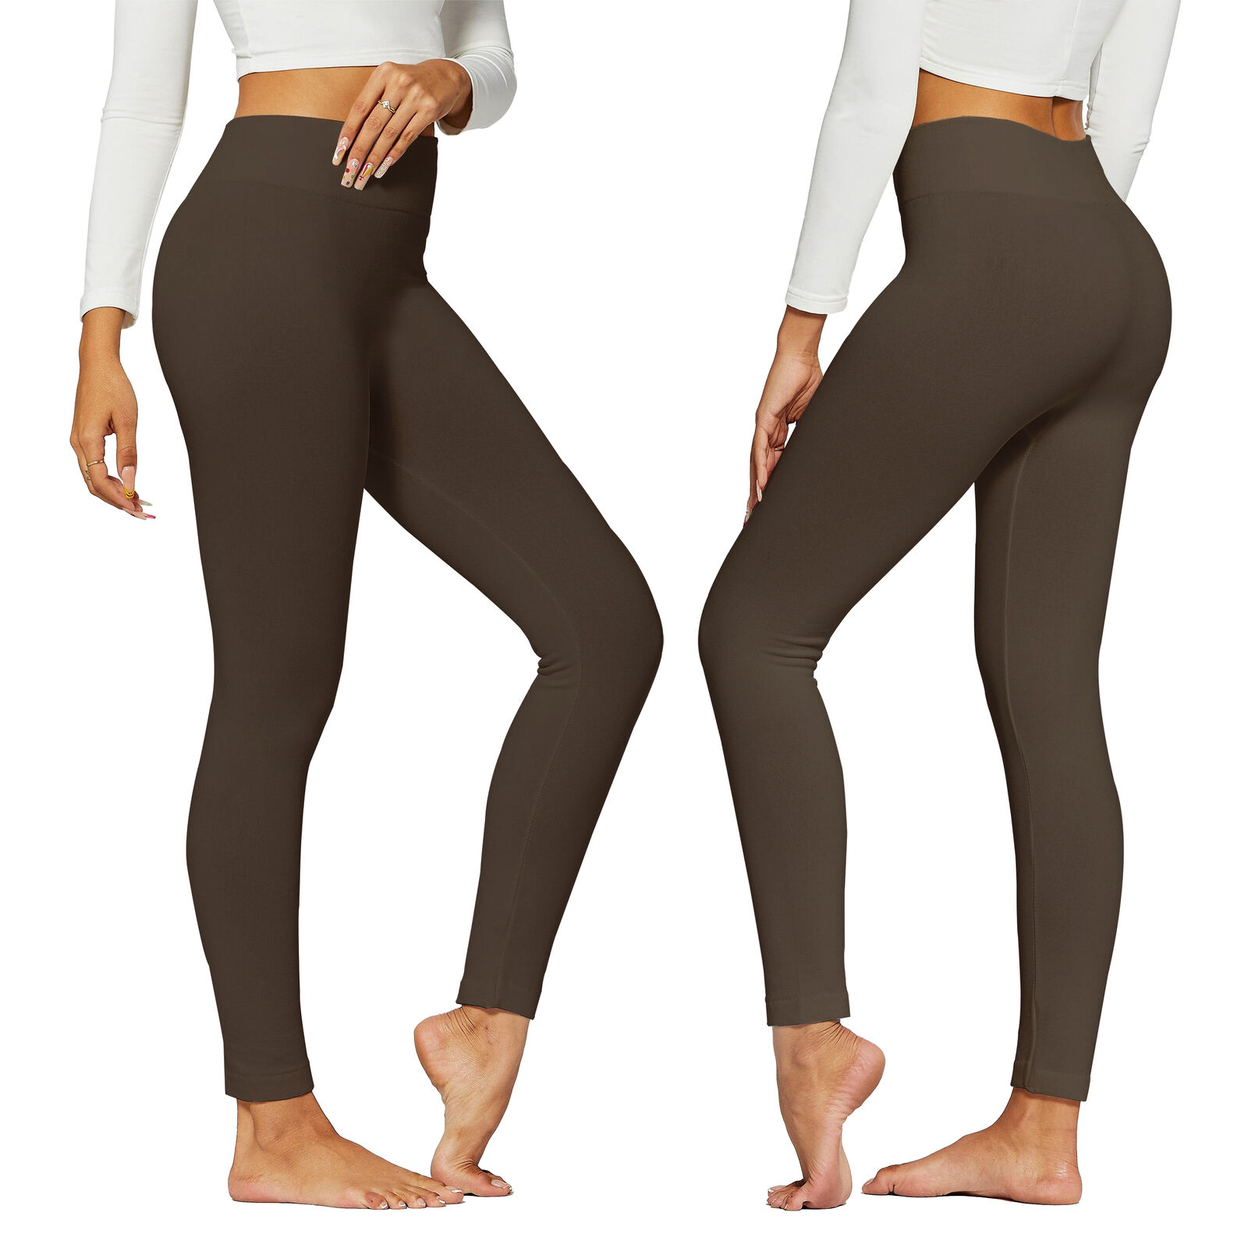 2-Pack: Women's Winter Warm High-Waist Soft Fleece Lined Leggings - Black & Grey, 4X